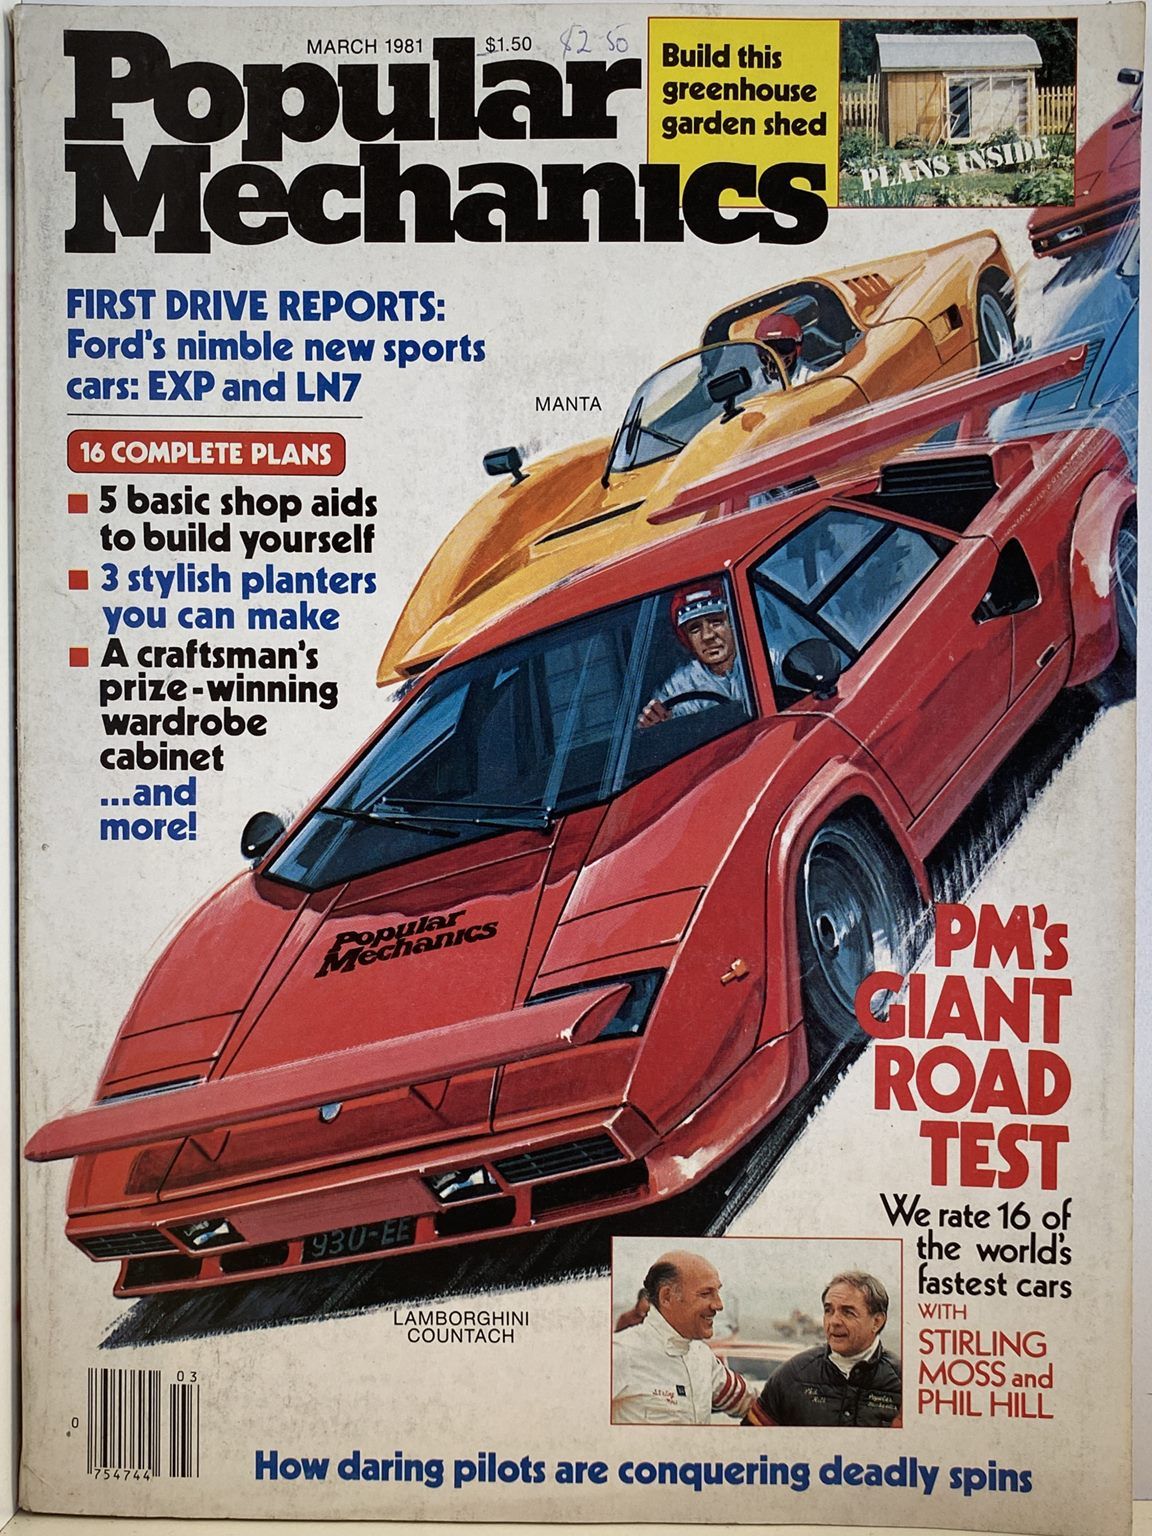 VINTAGE MAGAZINE: Popular Mechanics - Vol. 155, No. 3 - March 1981